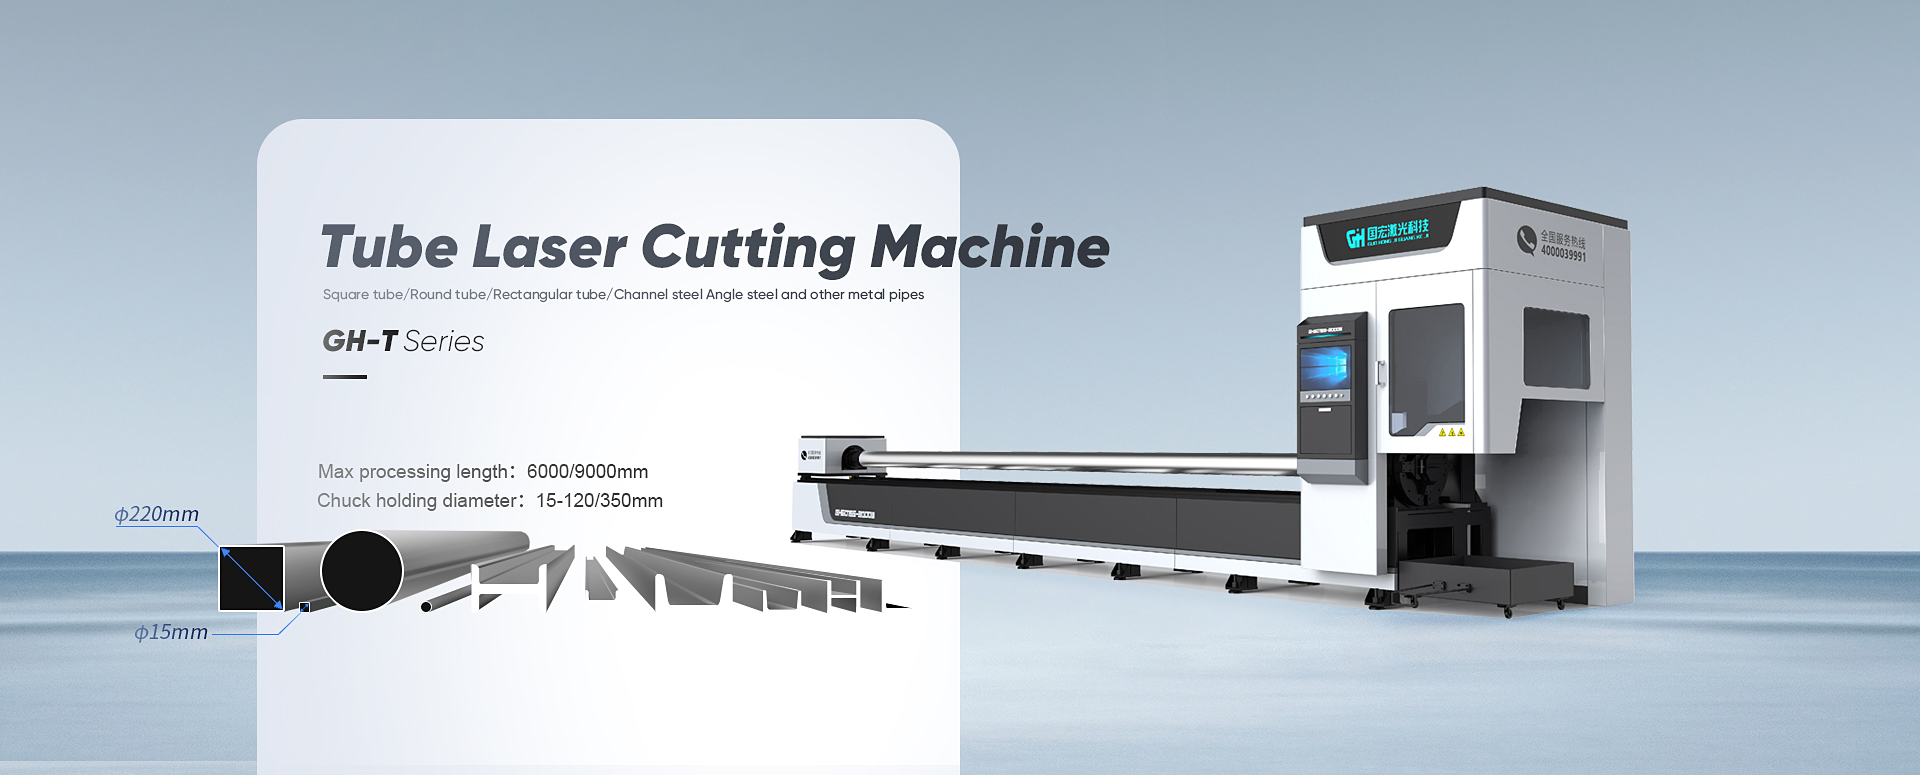 tube-laser-cutting-machine